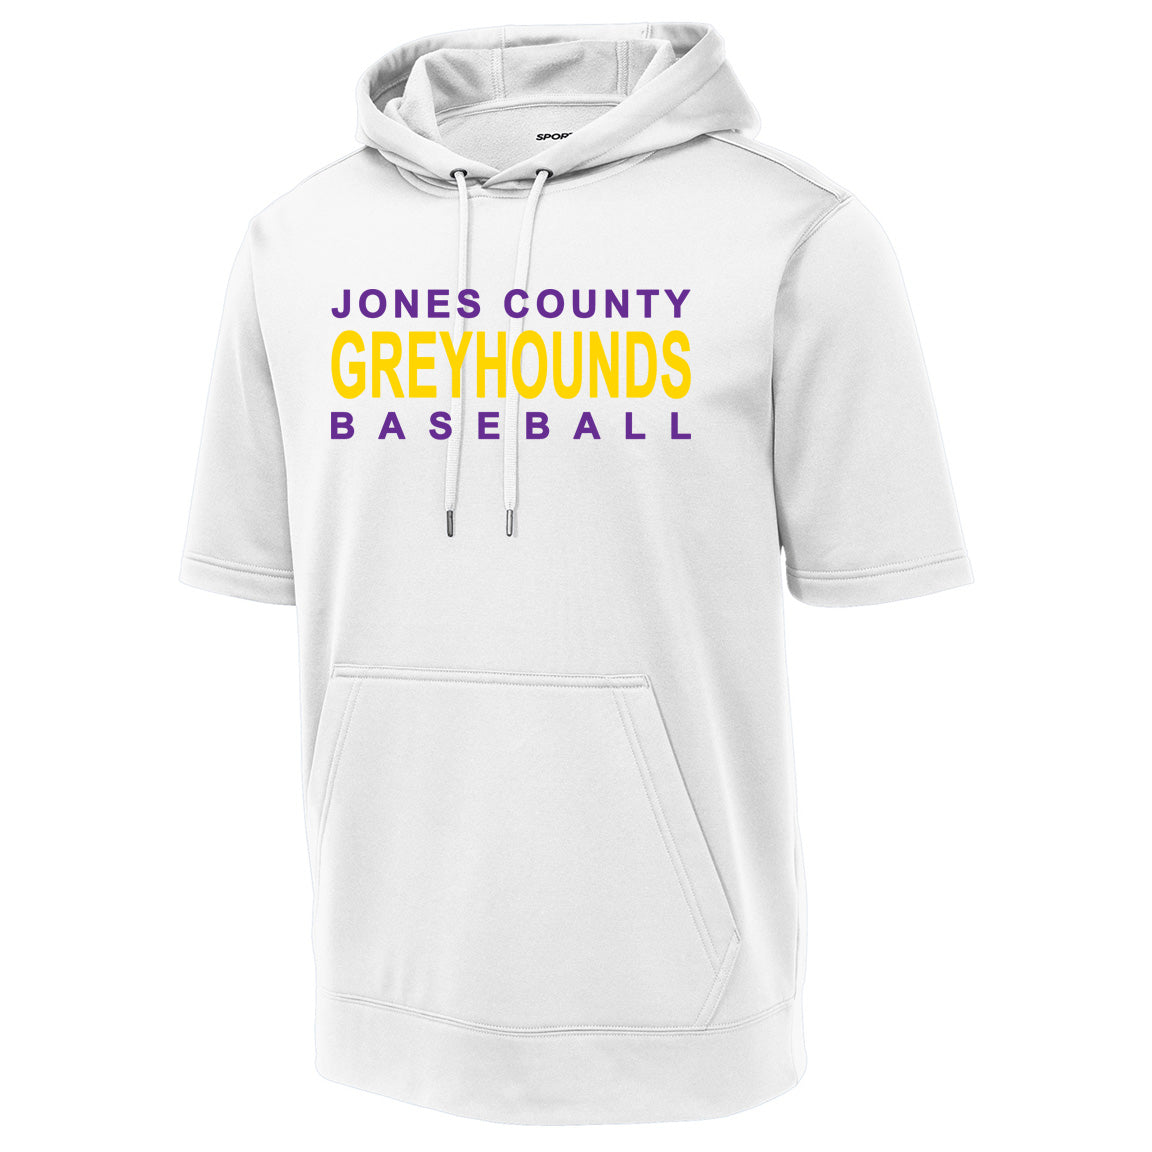 Jones County - Jones County Greyhounds Baseball - Moisture-Wicking Fleece Short Sleeve Hooded Pullover - White - Southern Grace Creations